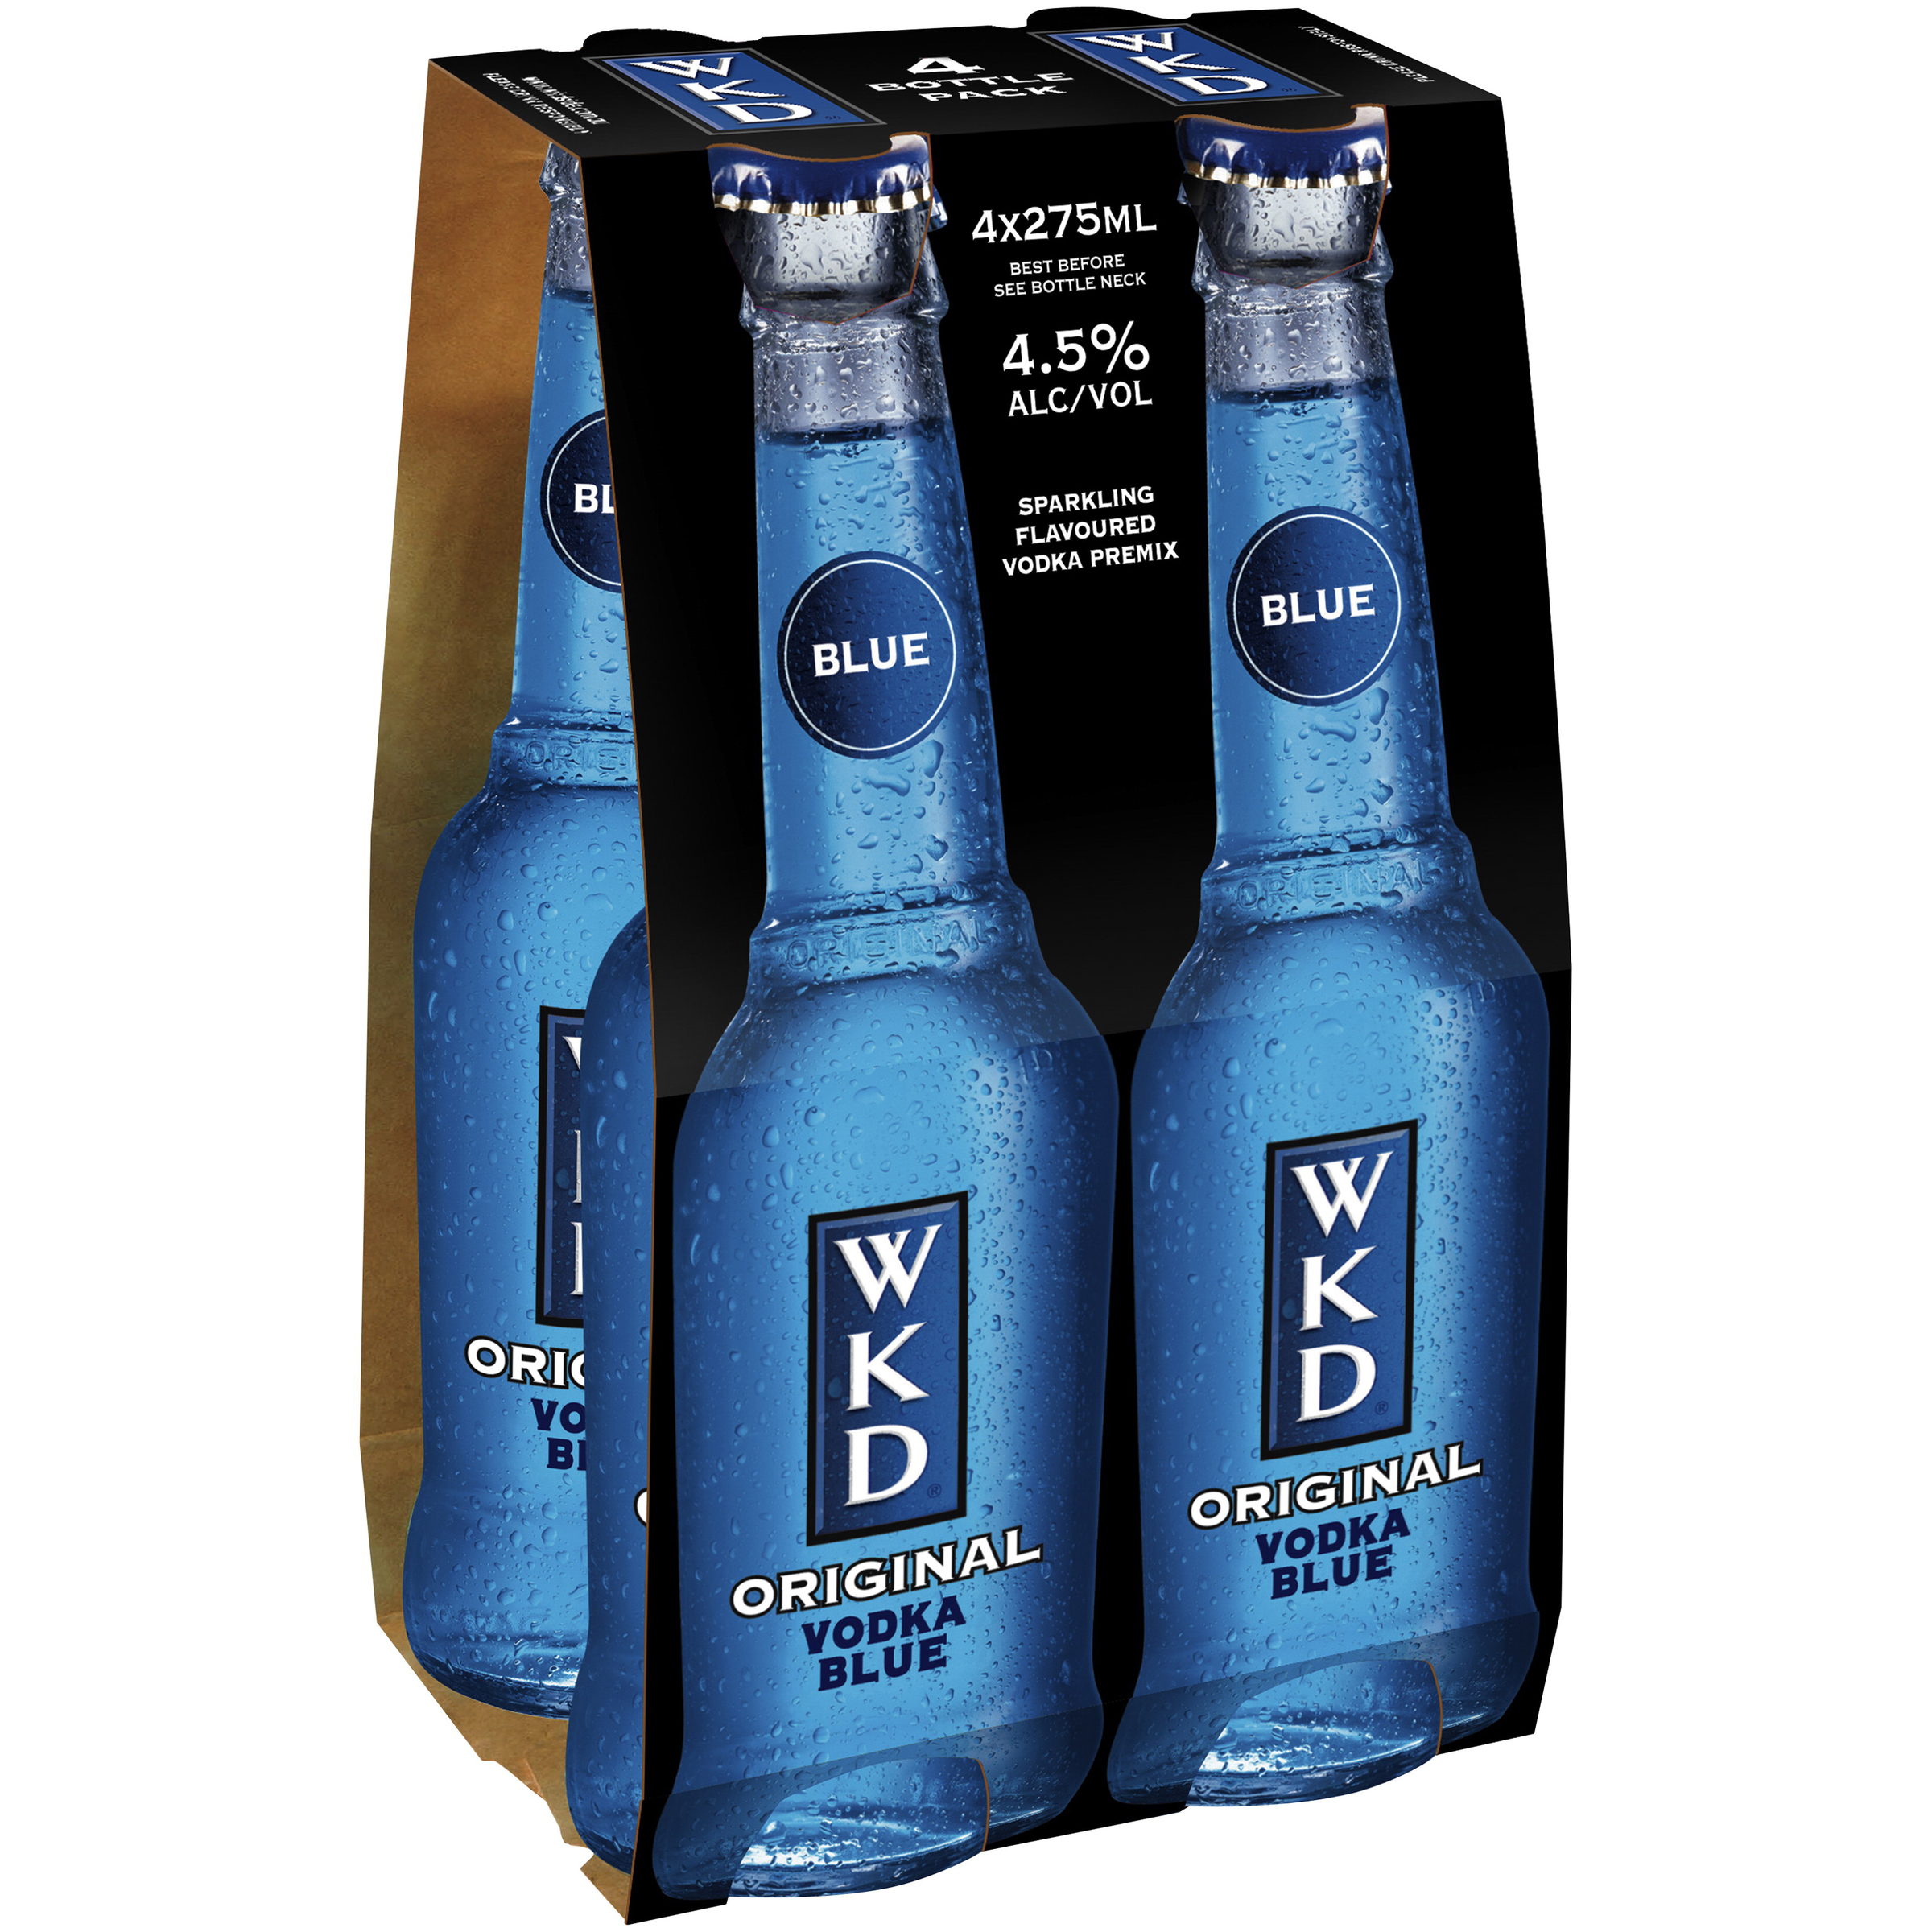 Blue value. Wkd Blue. Напиток wkd.